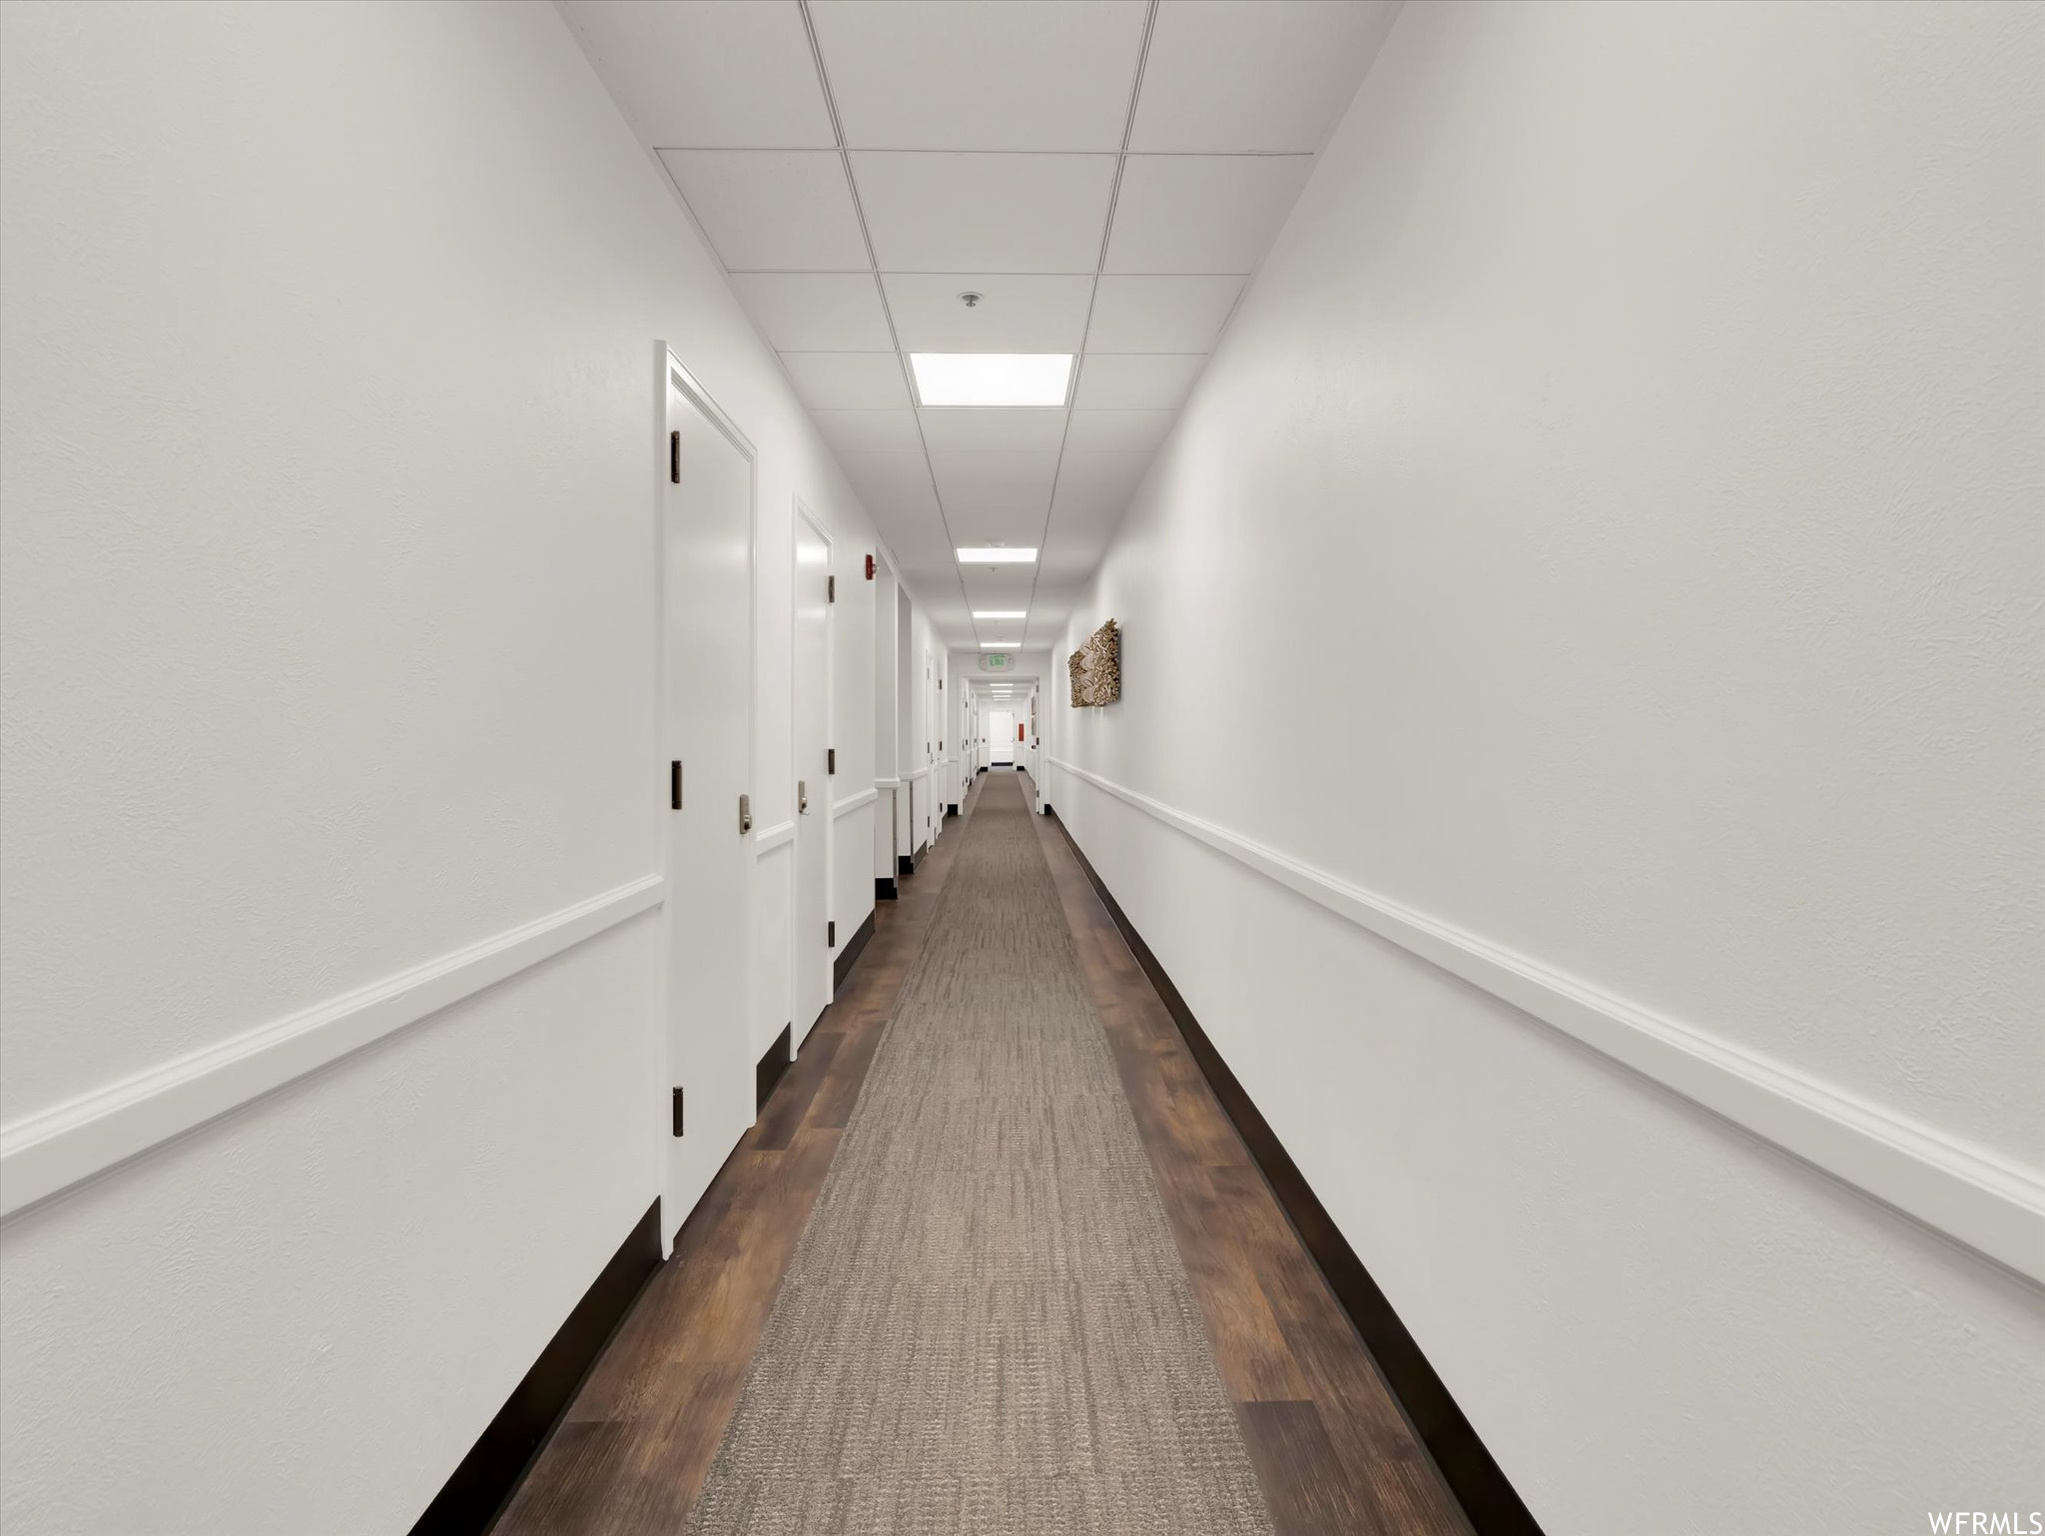 Corridor with a drop ceiling and dark hardwood floors